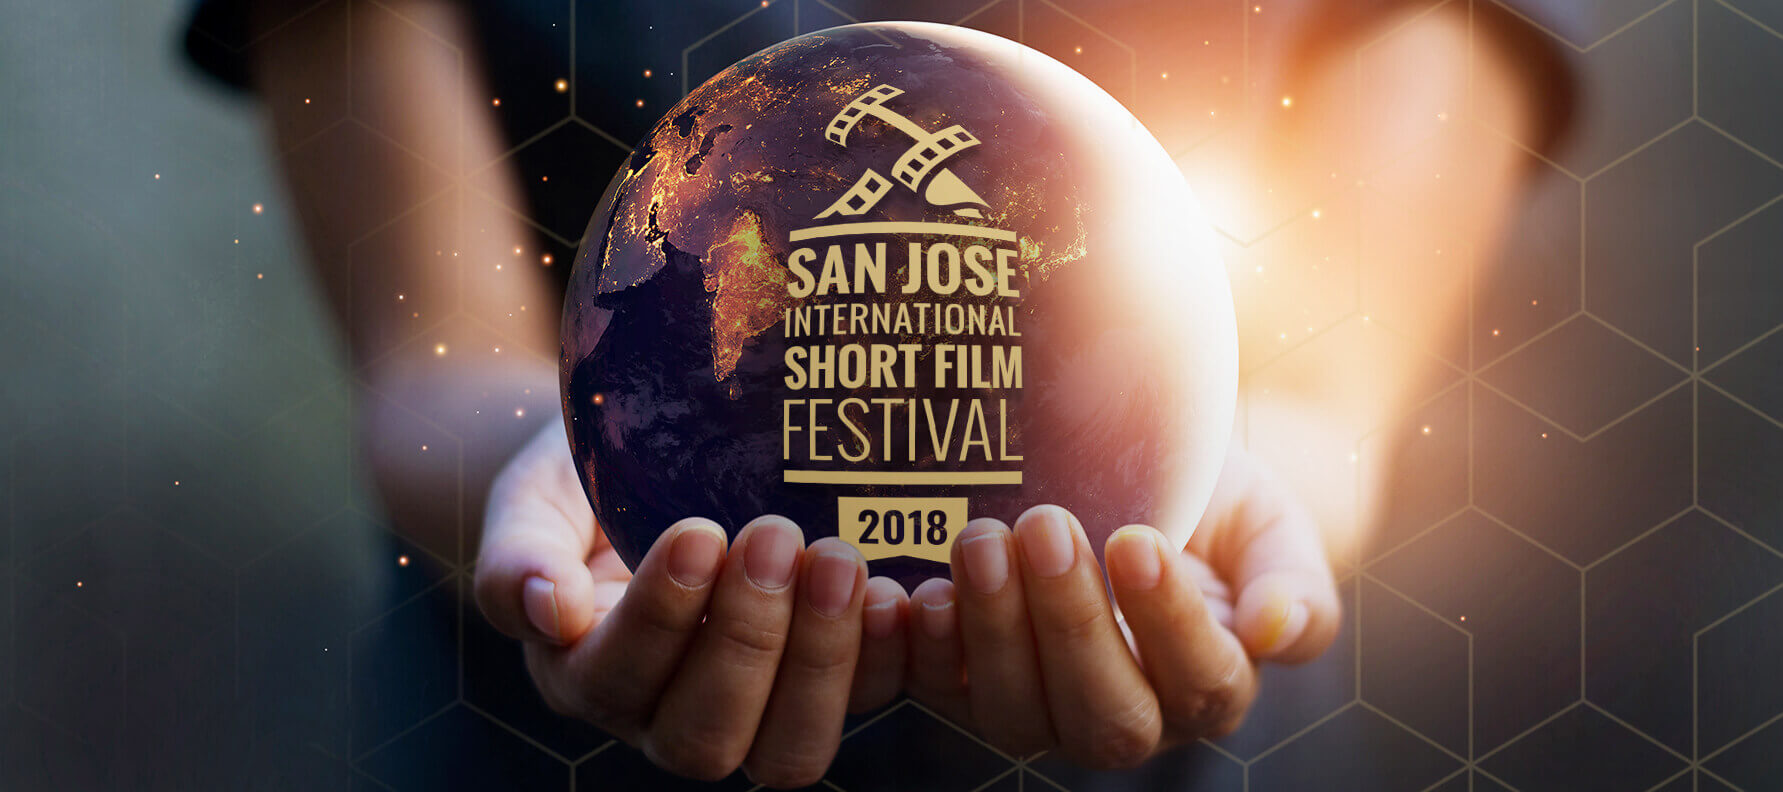 San Jose International Short Film Festival globe logo in palm of hands